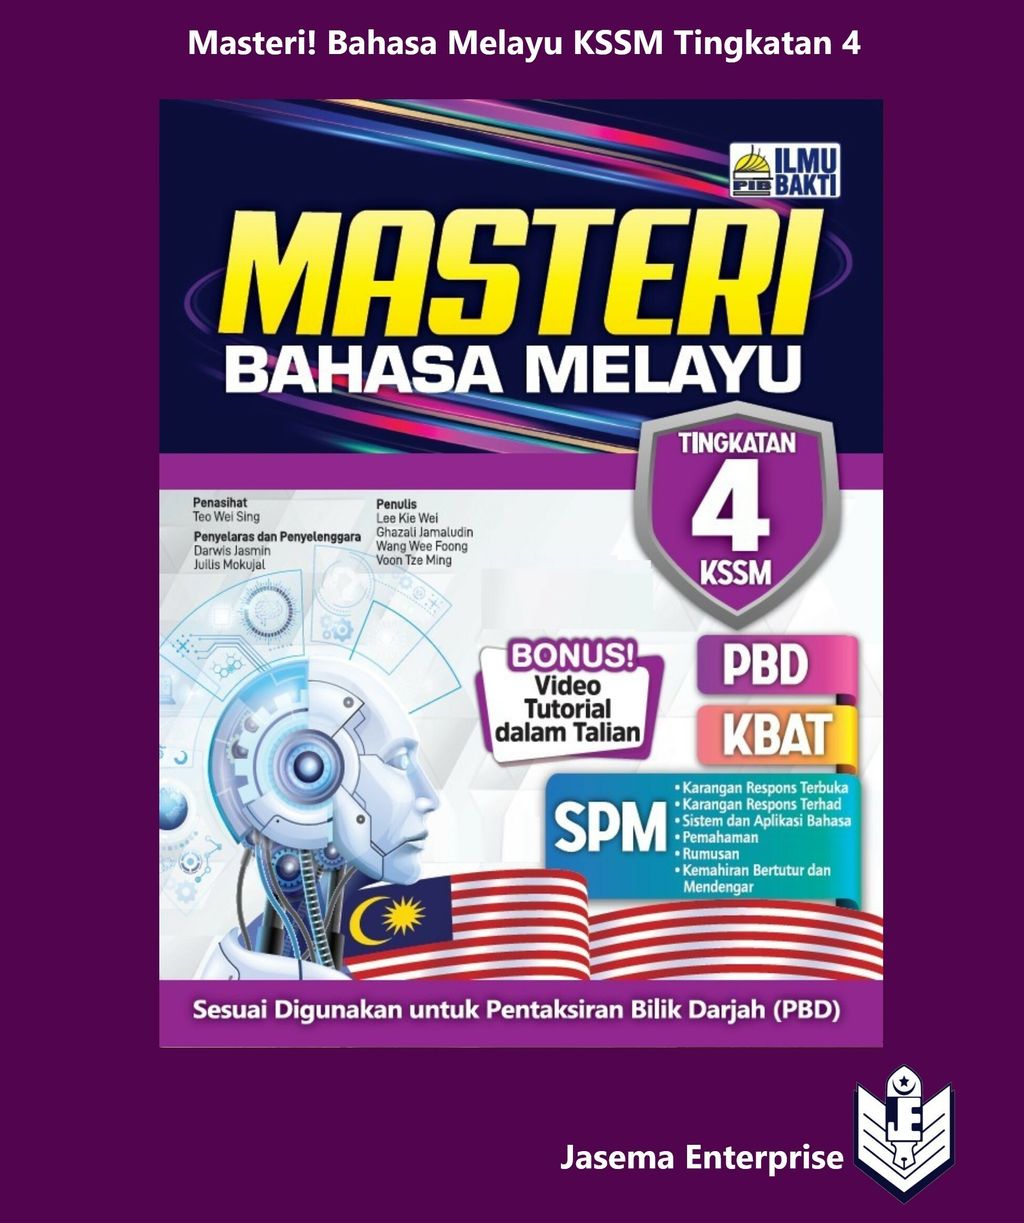 Masteri Bahasa Melayu Tingkatan 4 Kssm Jasema Enterprise